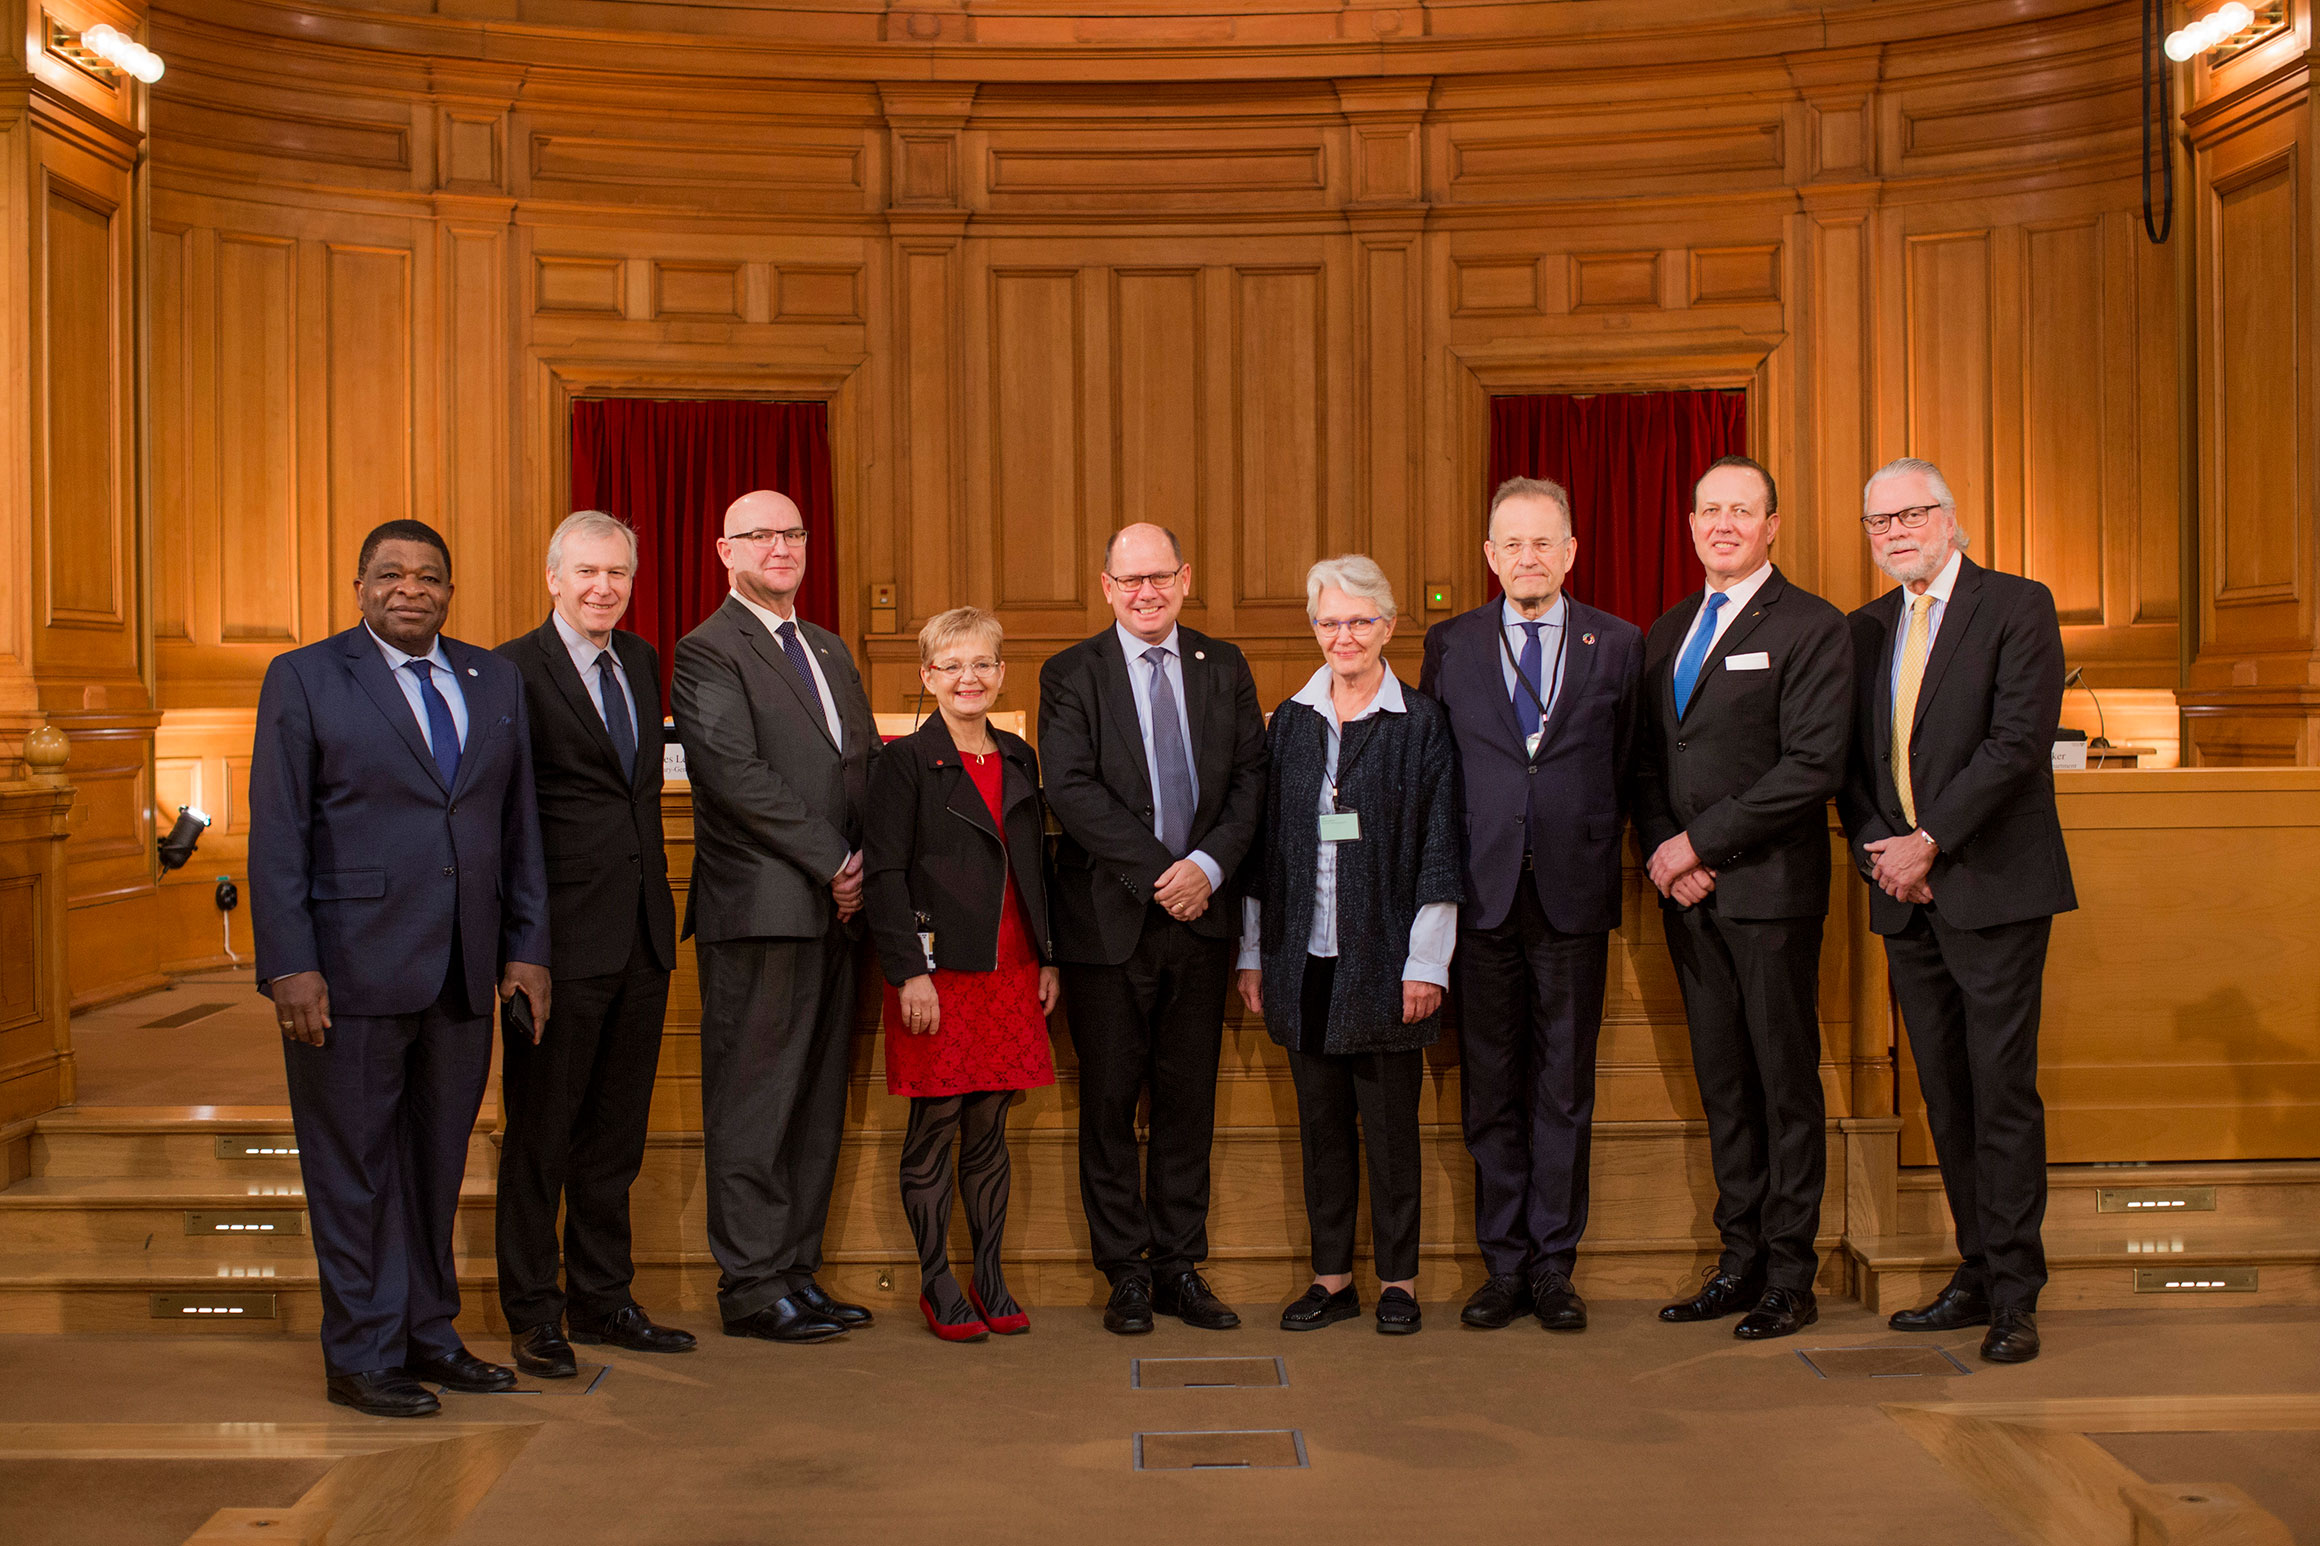 High level panel at the Swedish Riksdag, 30 November 2017. Image: Melker Dahlstrand/Swedish Parliament.